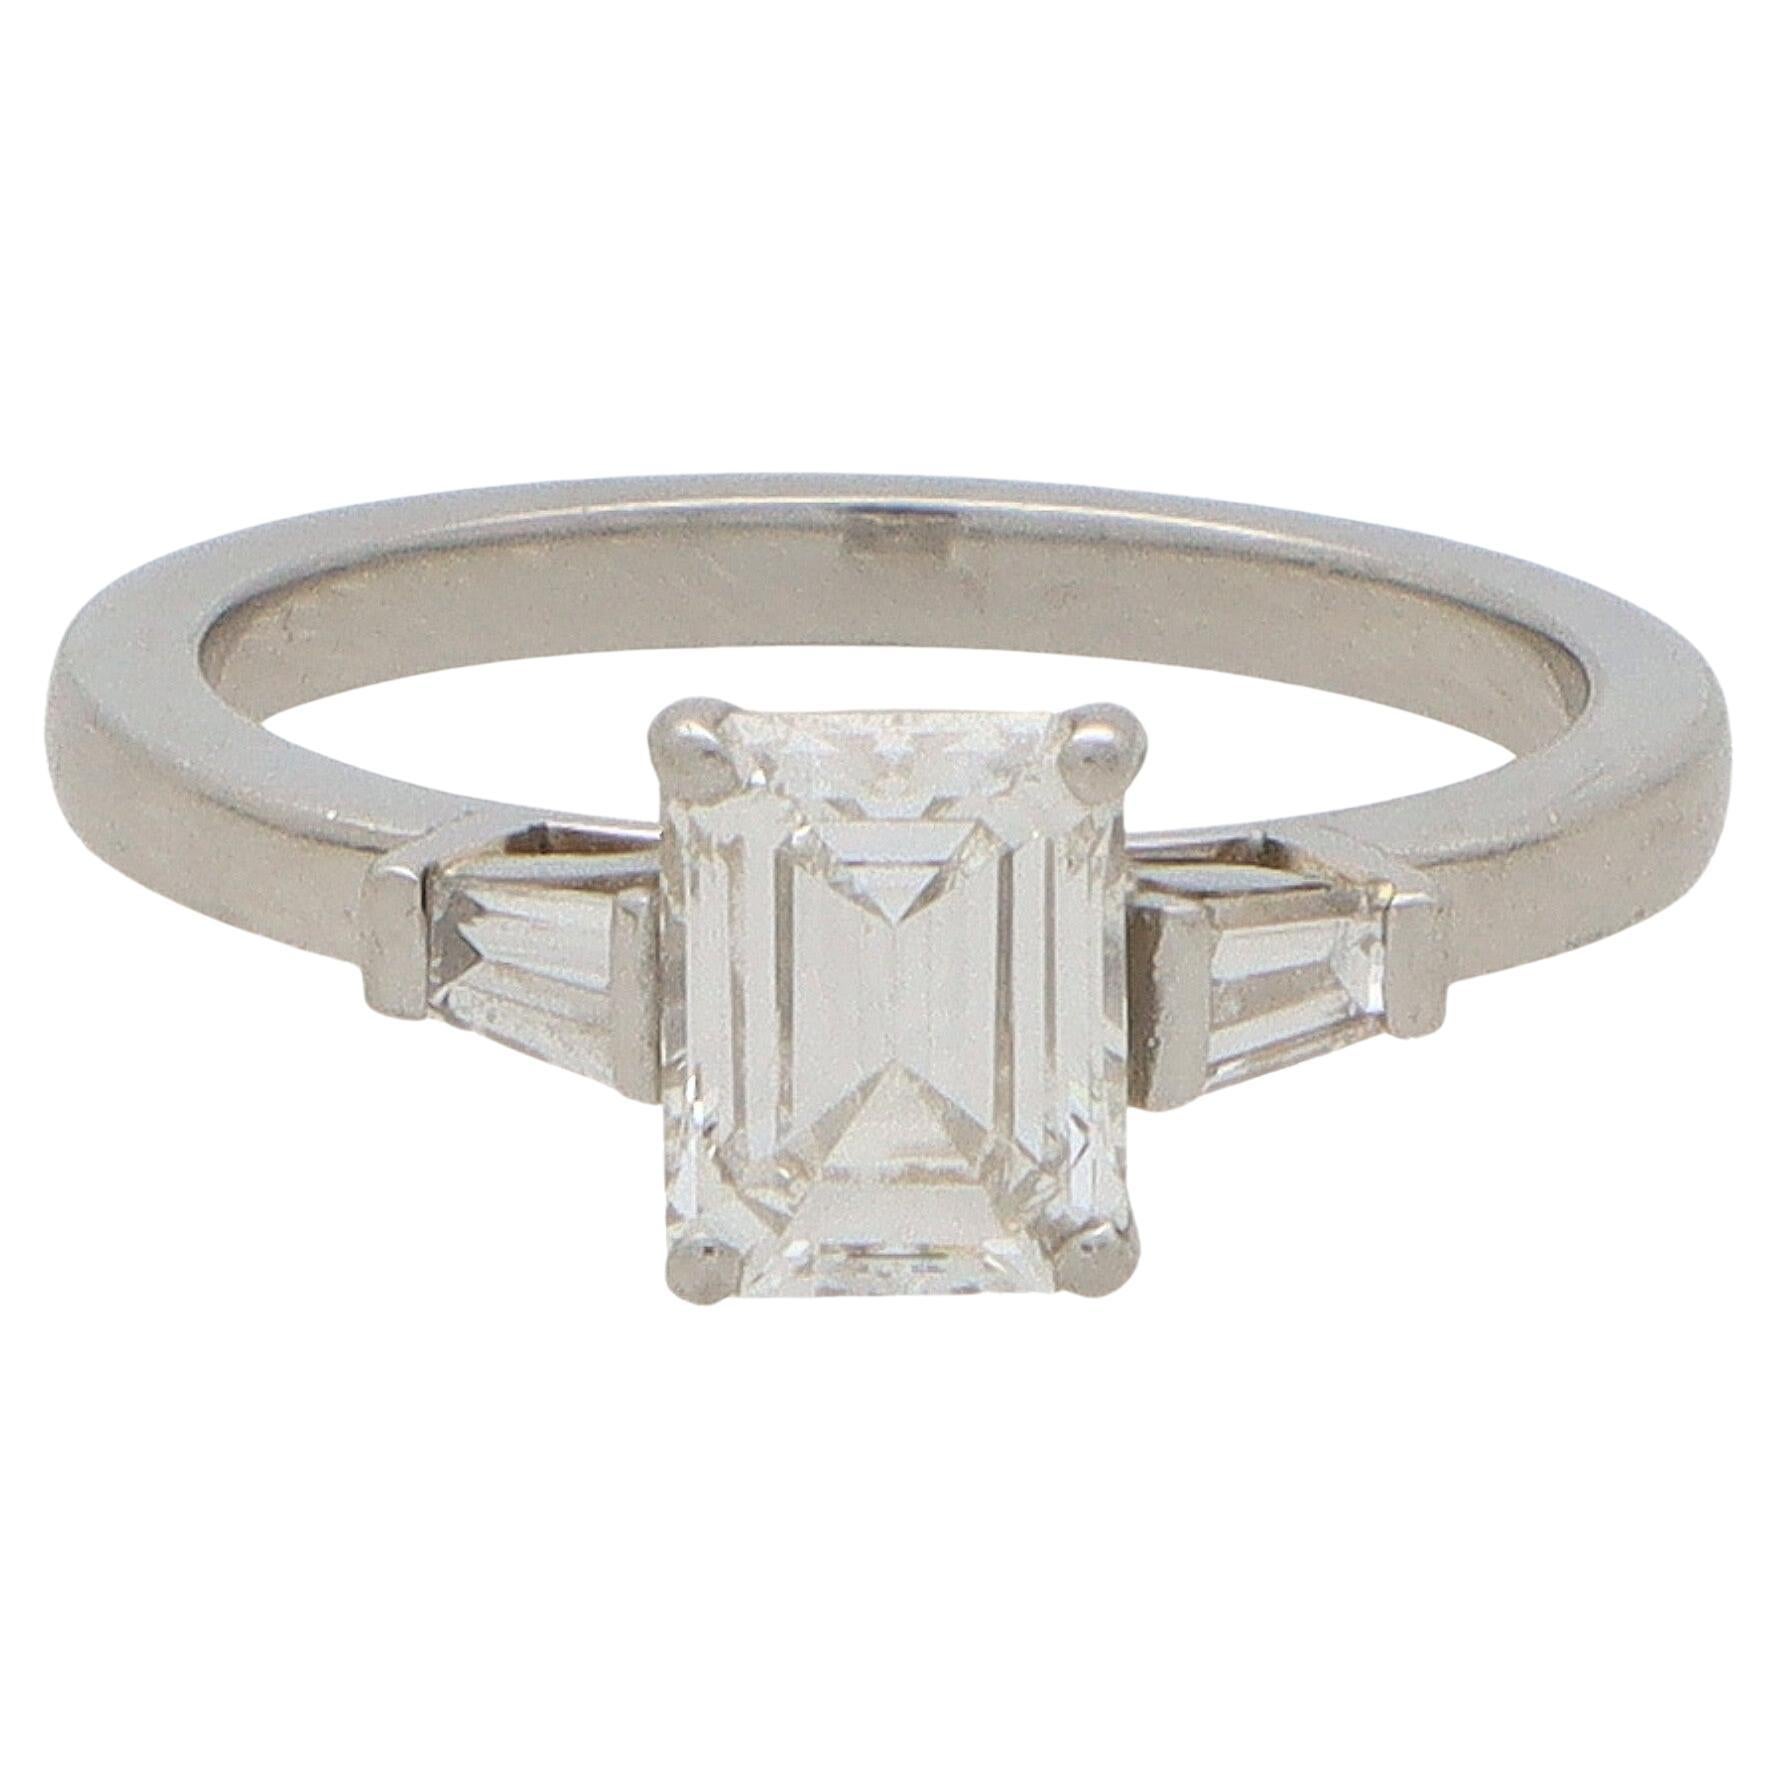 Certified Vintage Emerald Cut Diamond Ring Set in Platinum